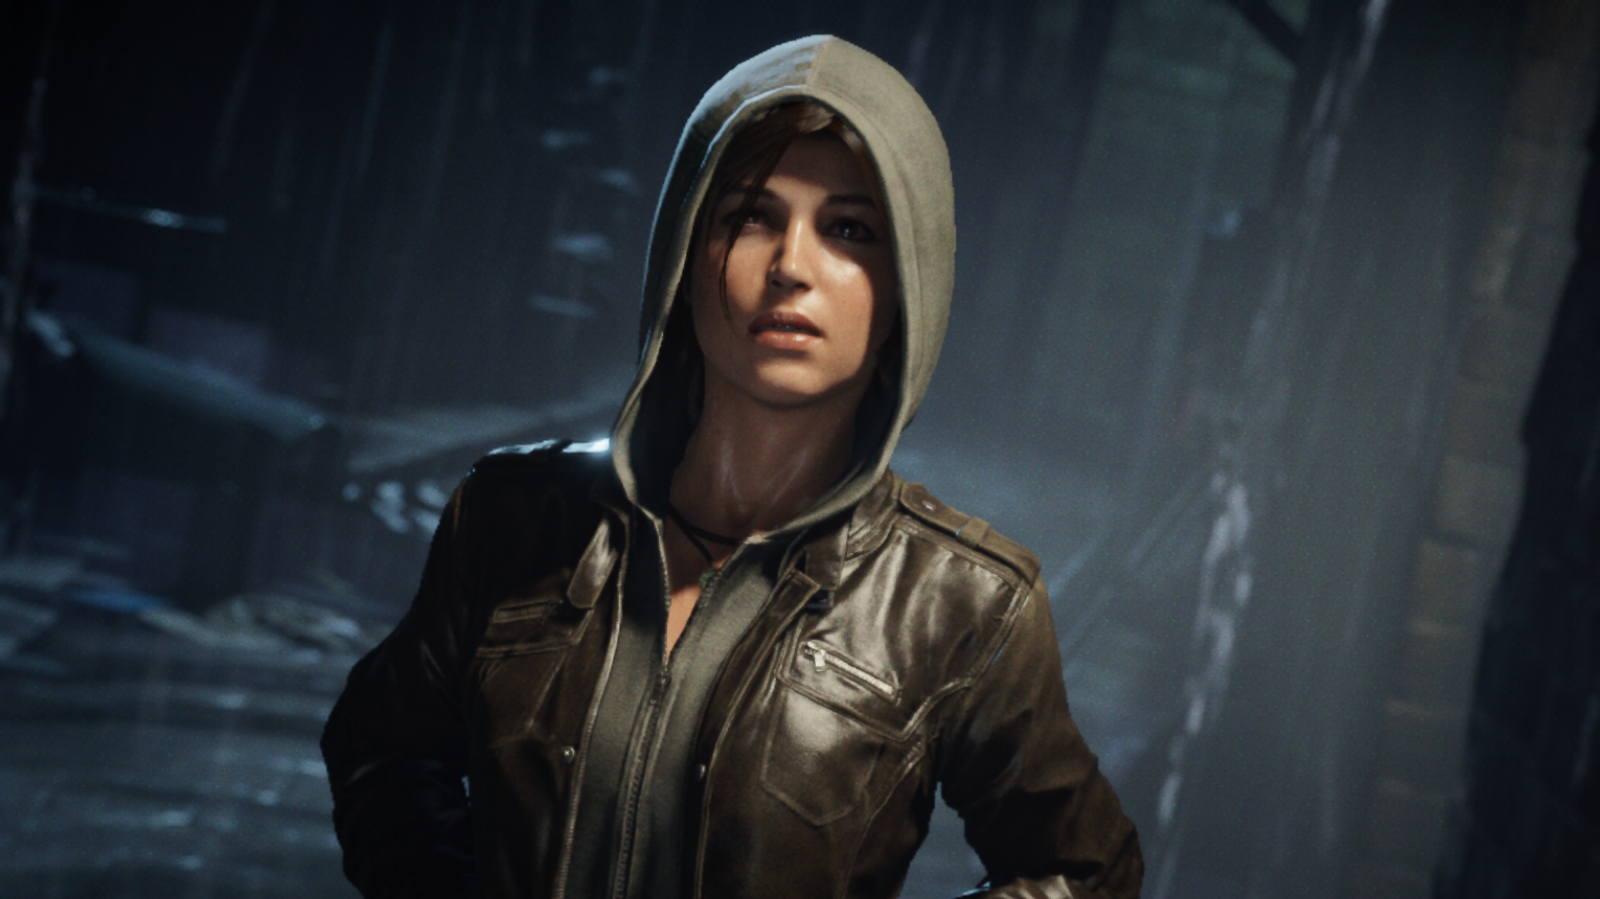 Lara dons a hoodie during a rainy, London night.